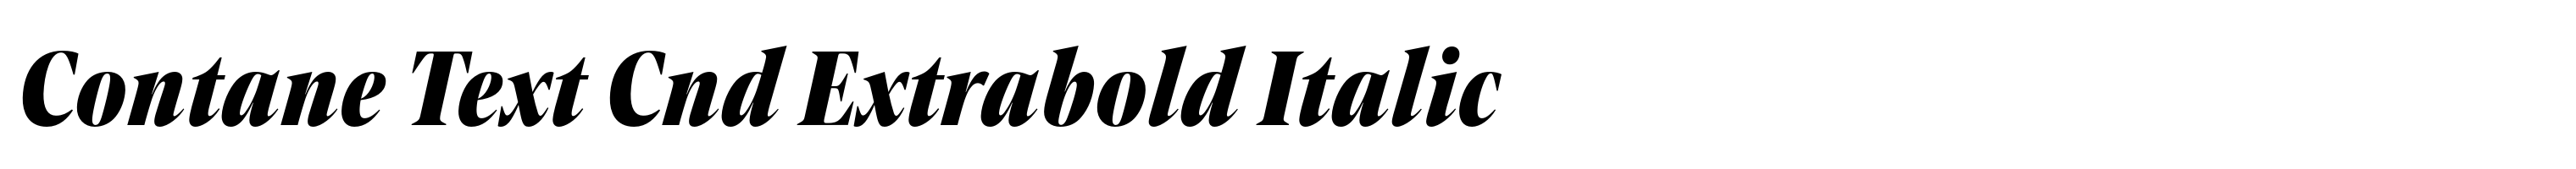 Contane Text Cnd Extrabold Italic